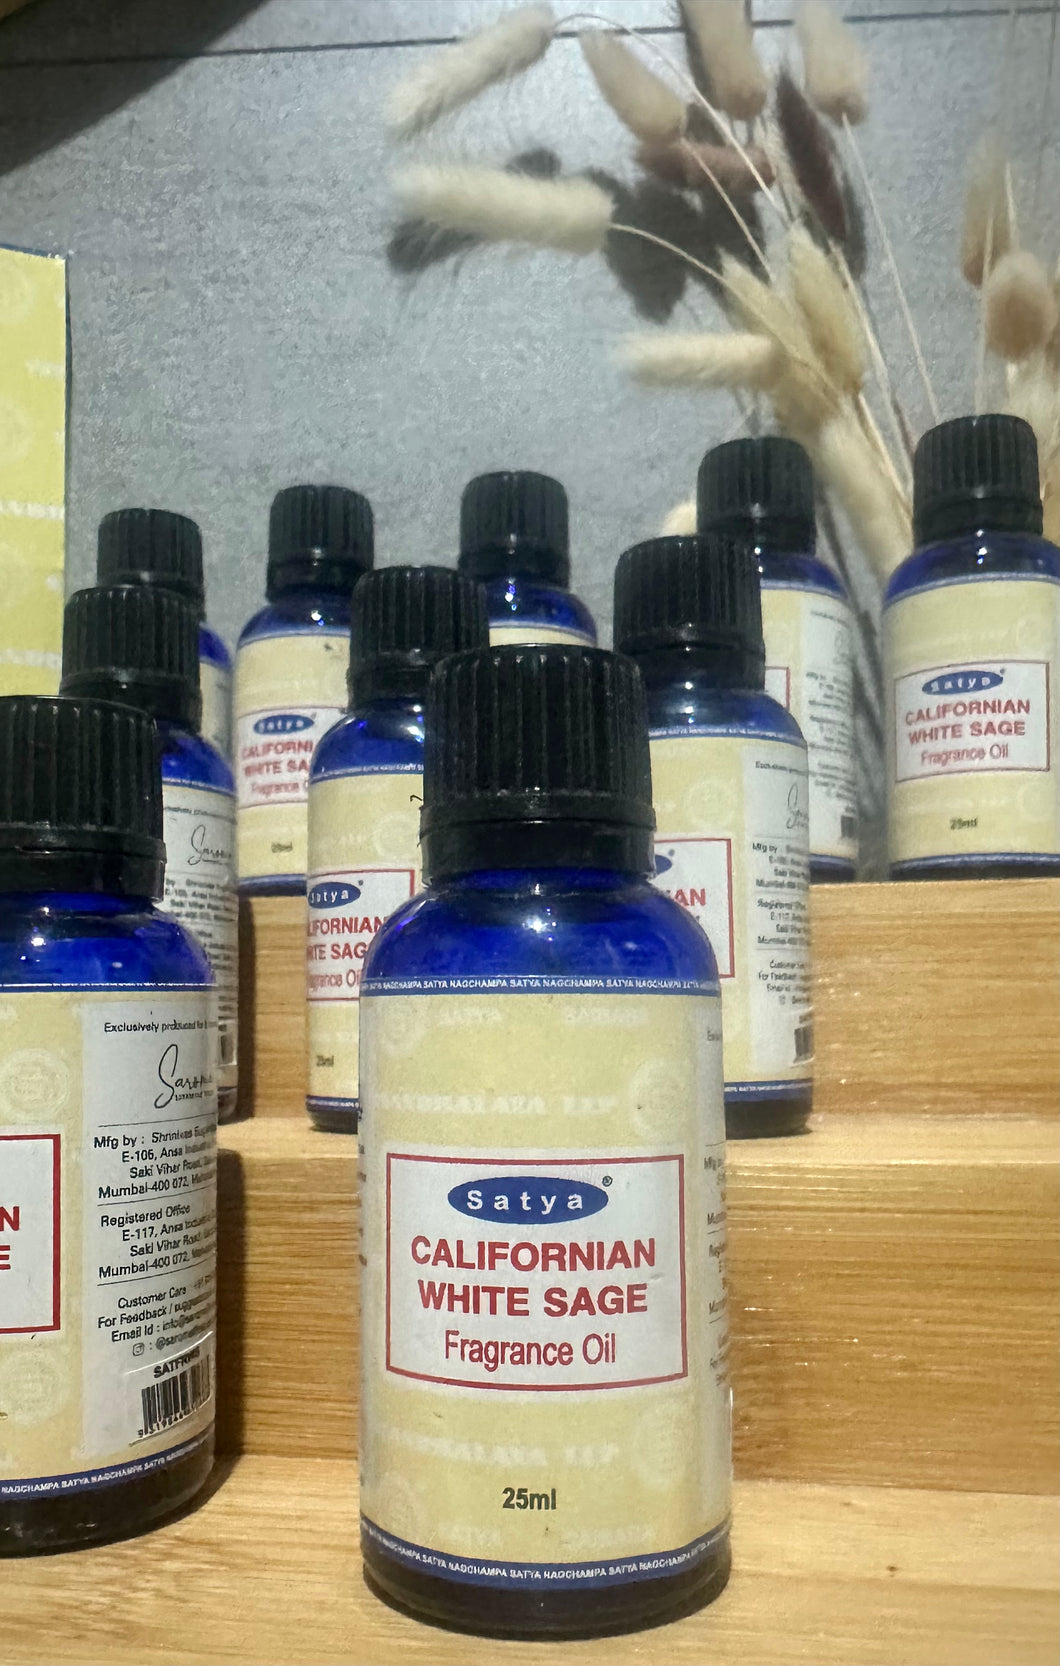 Satya Californian White Sage Fragrance Oil